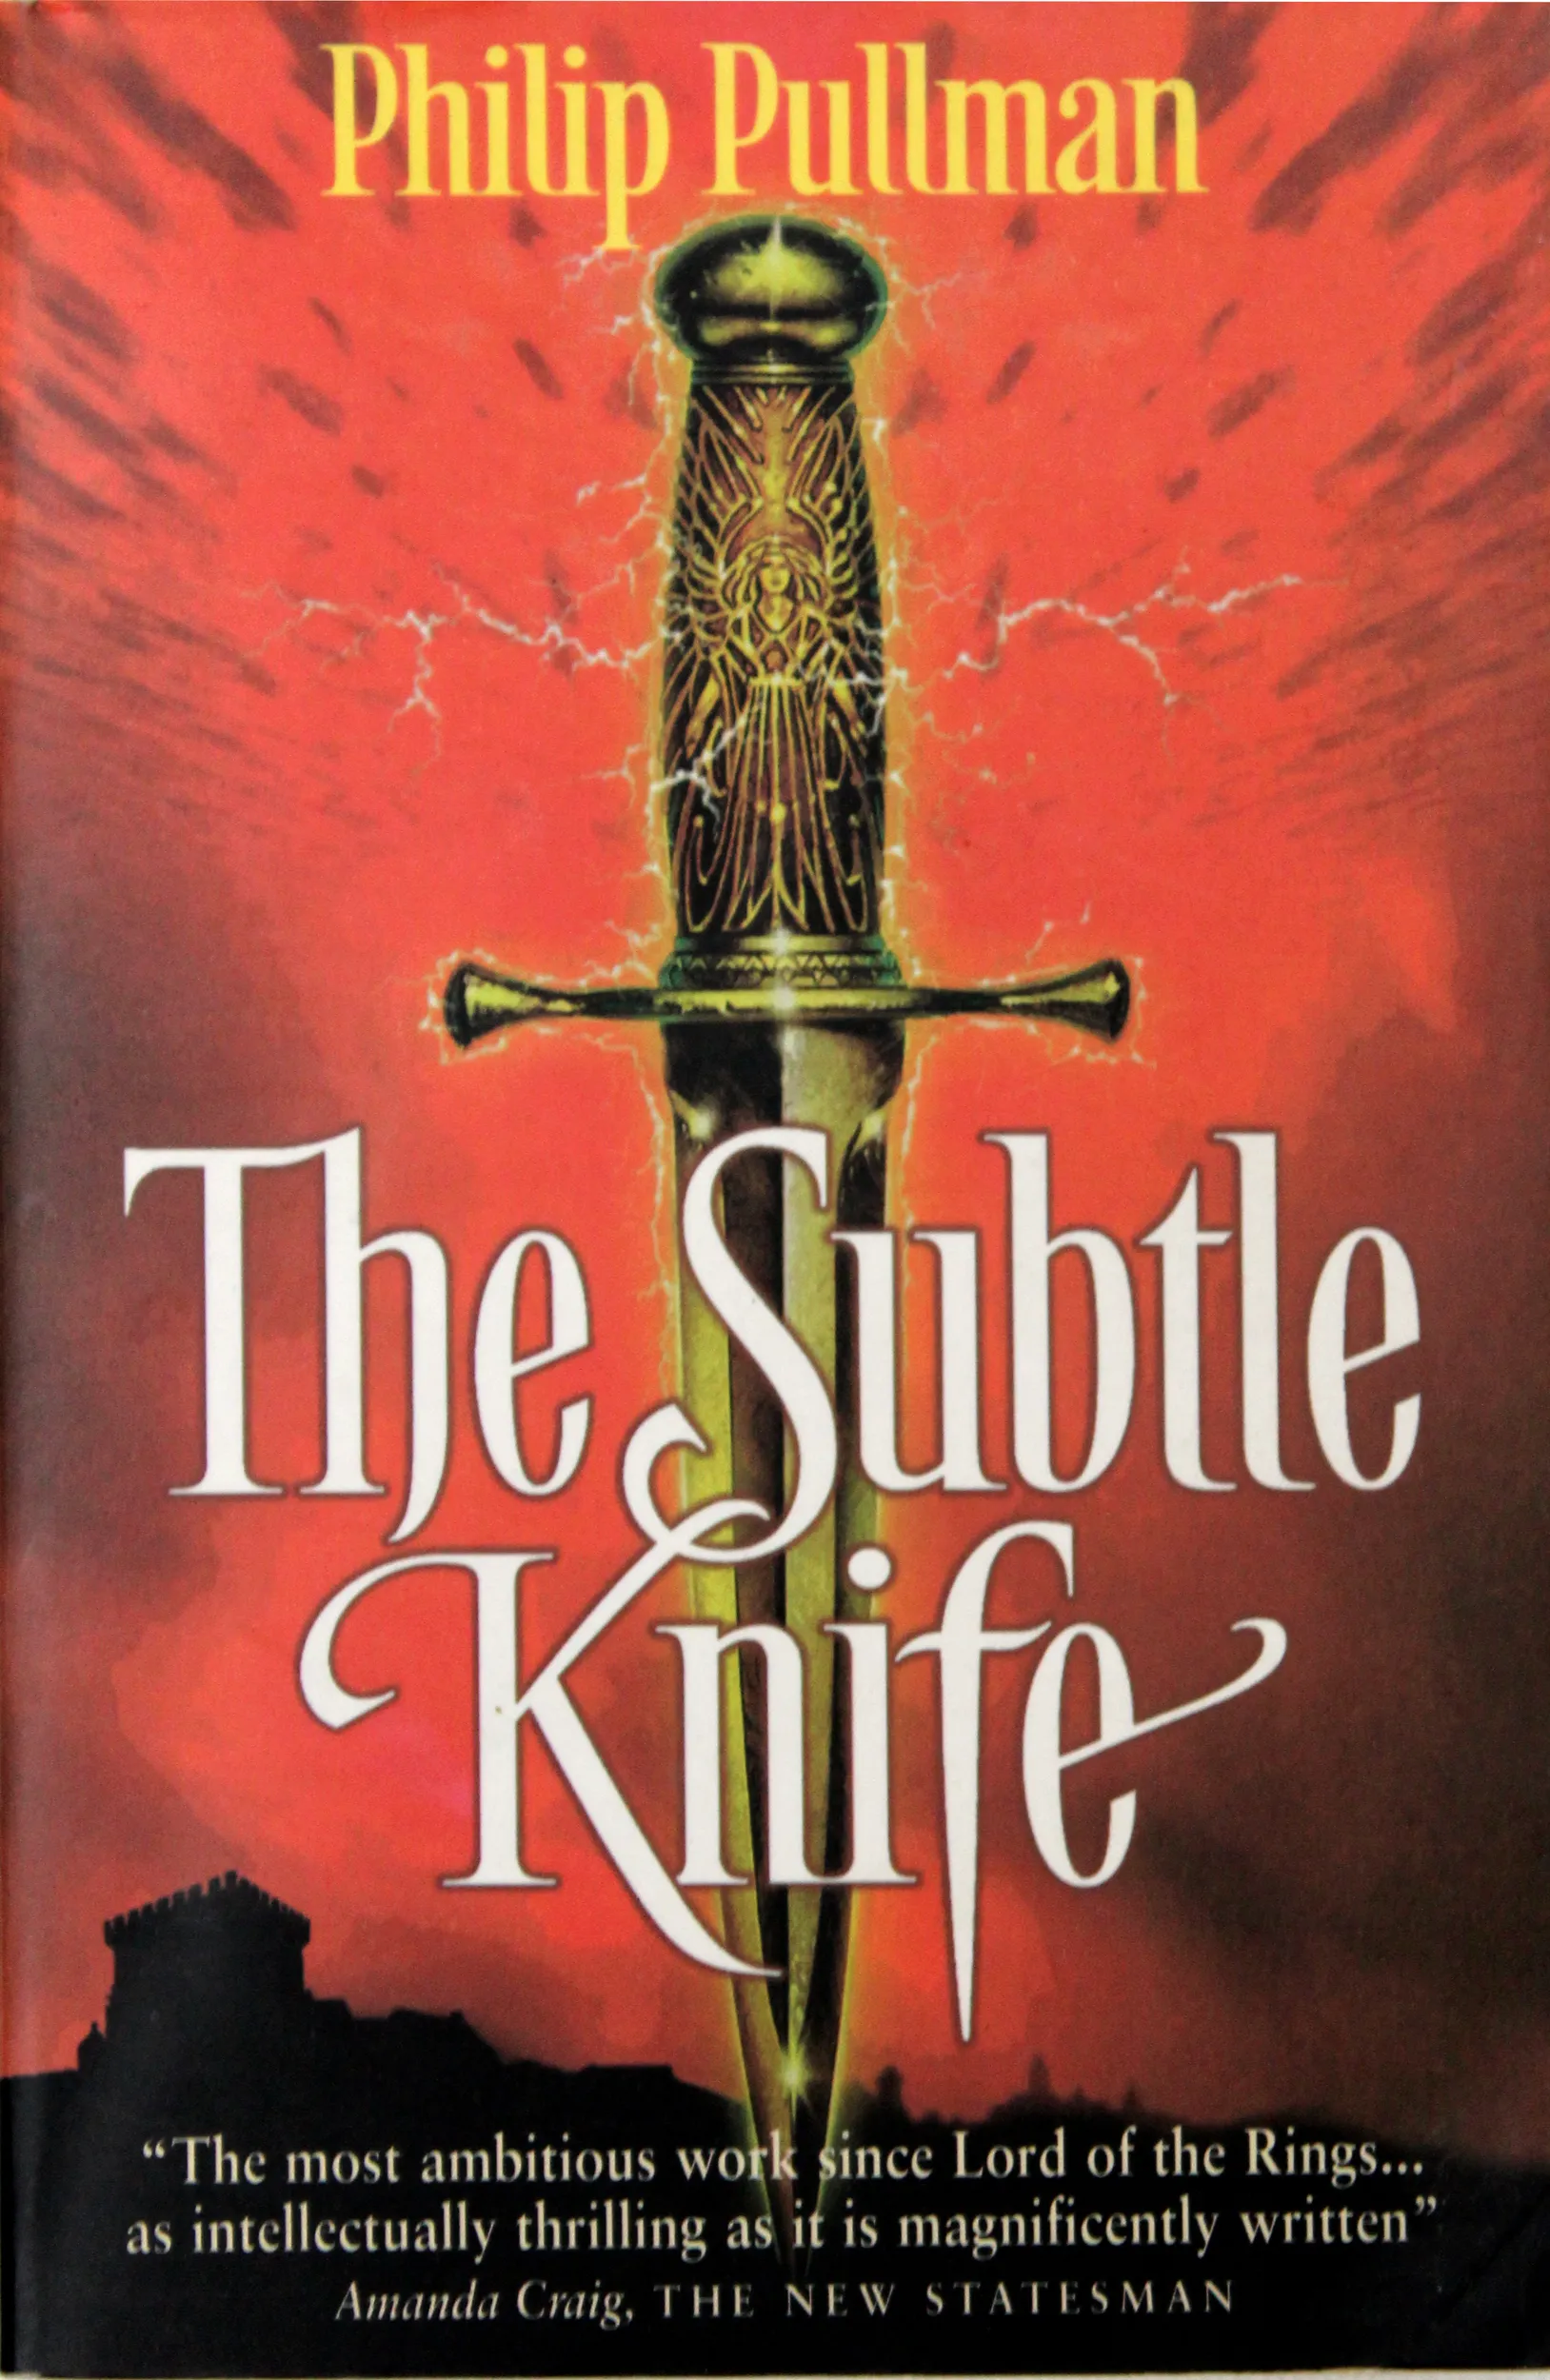 Philip Pullman: The Subtle Knife (2001, Random House Children's Books)